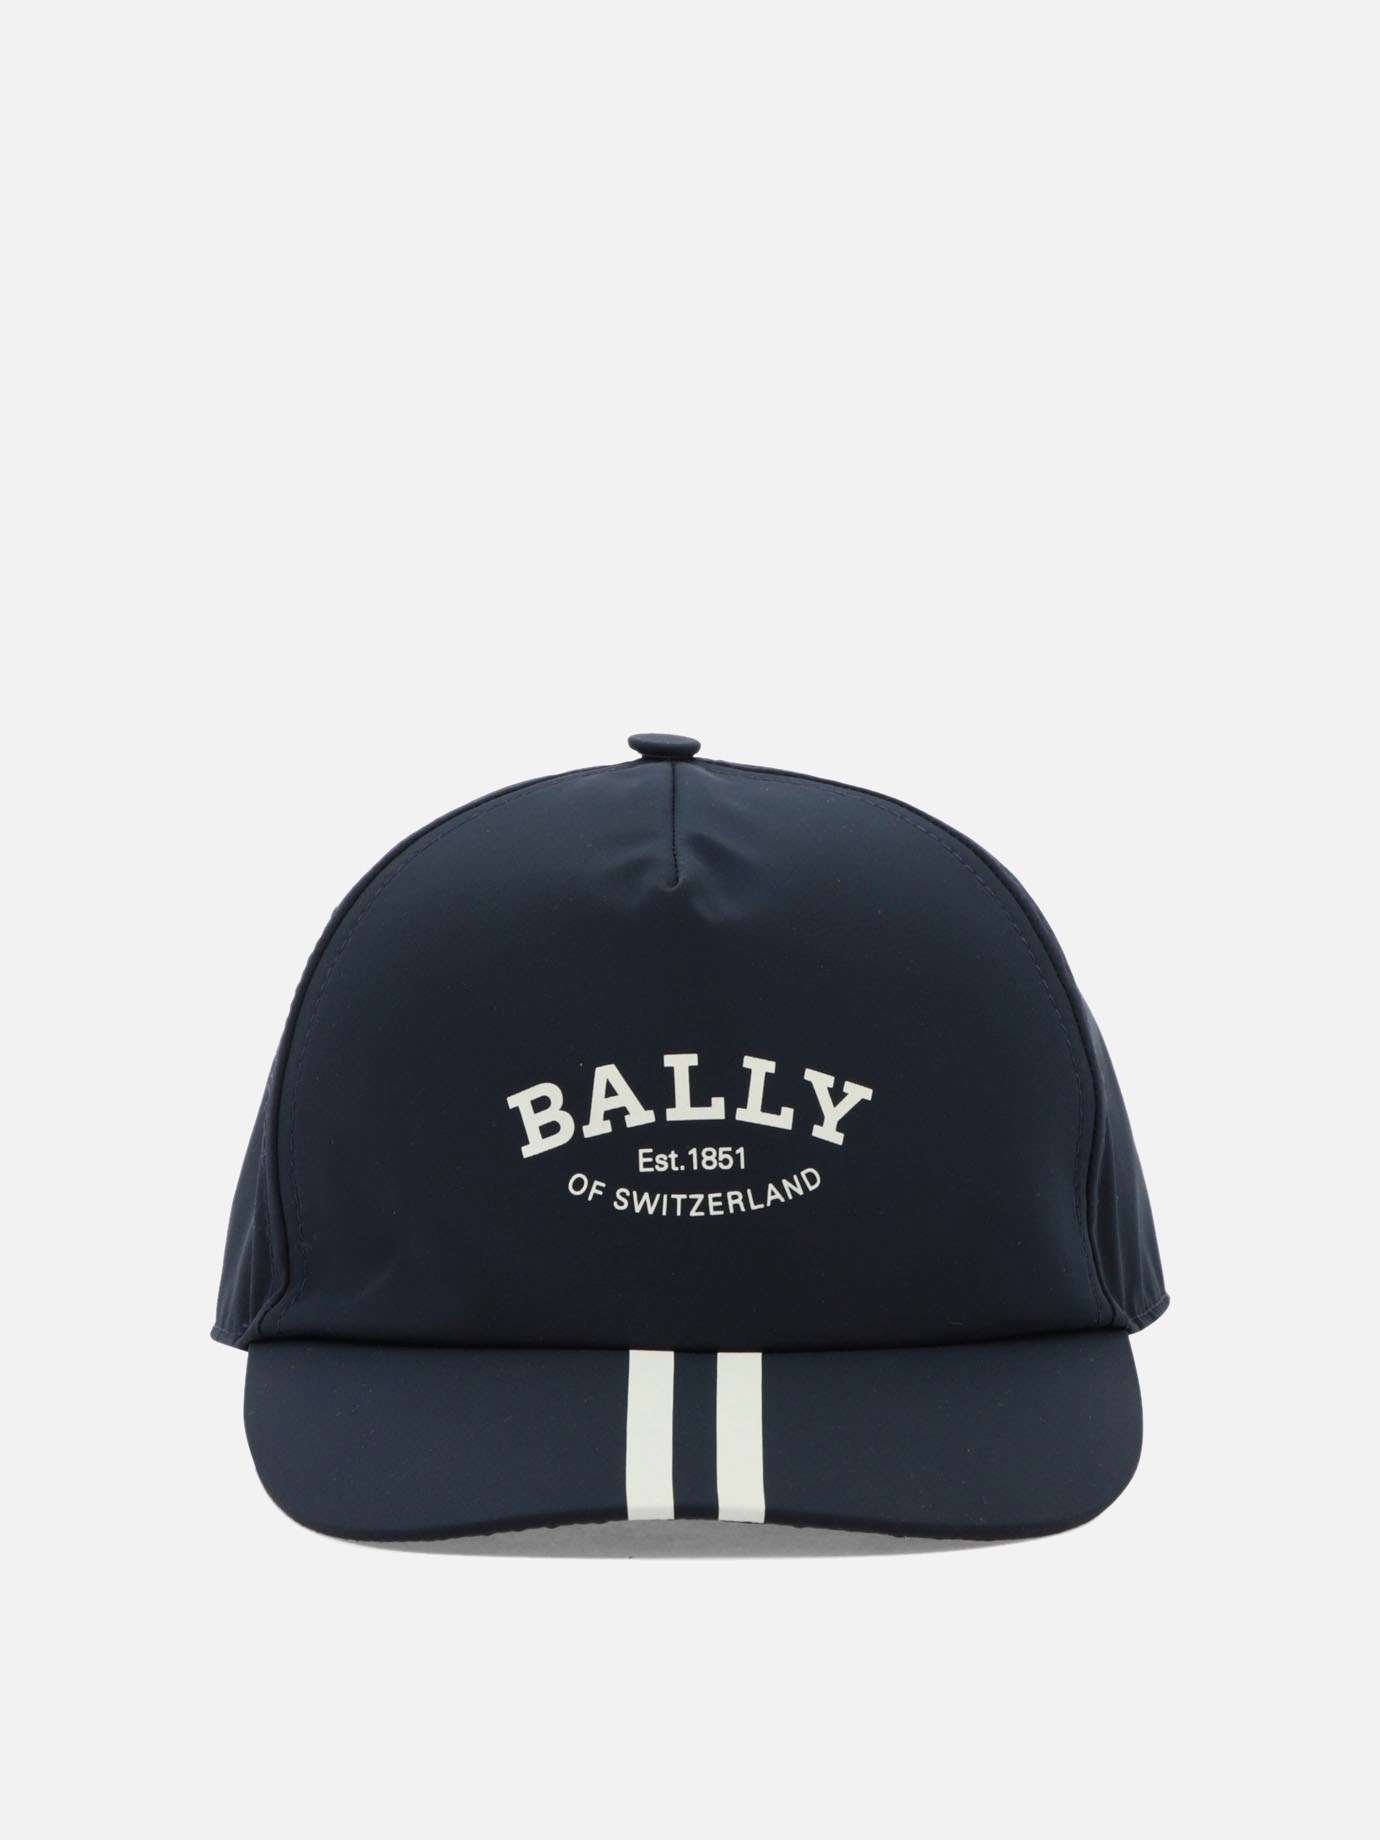  Est. 1851  baseball capby Bally - 0